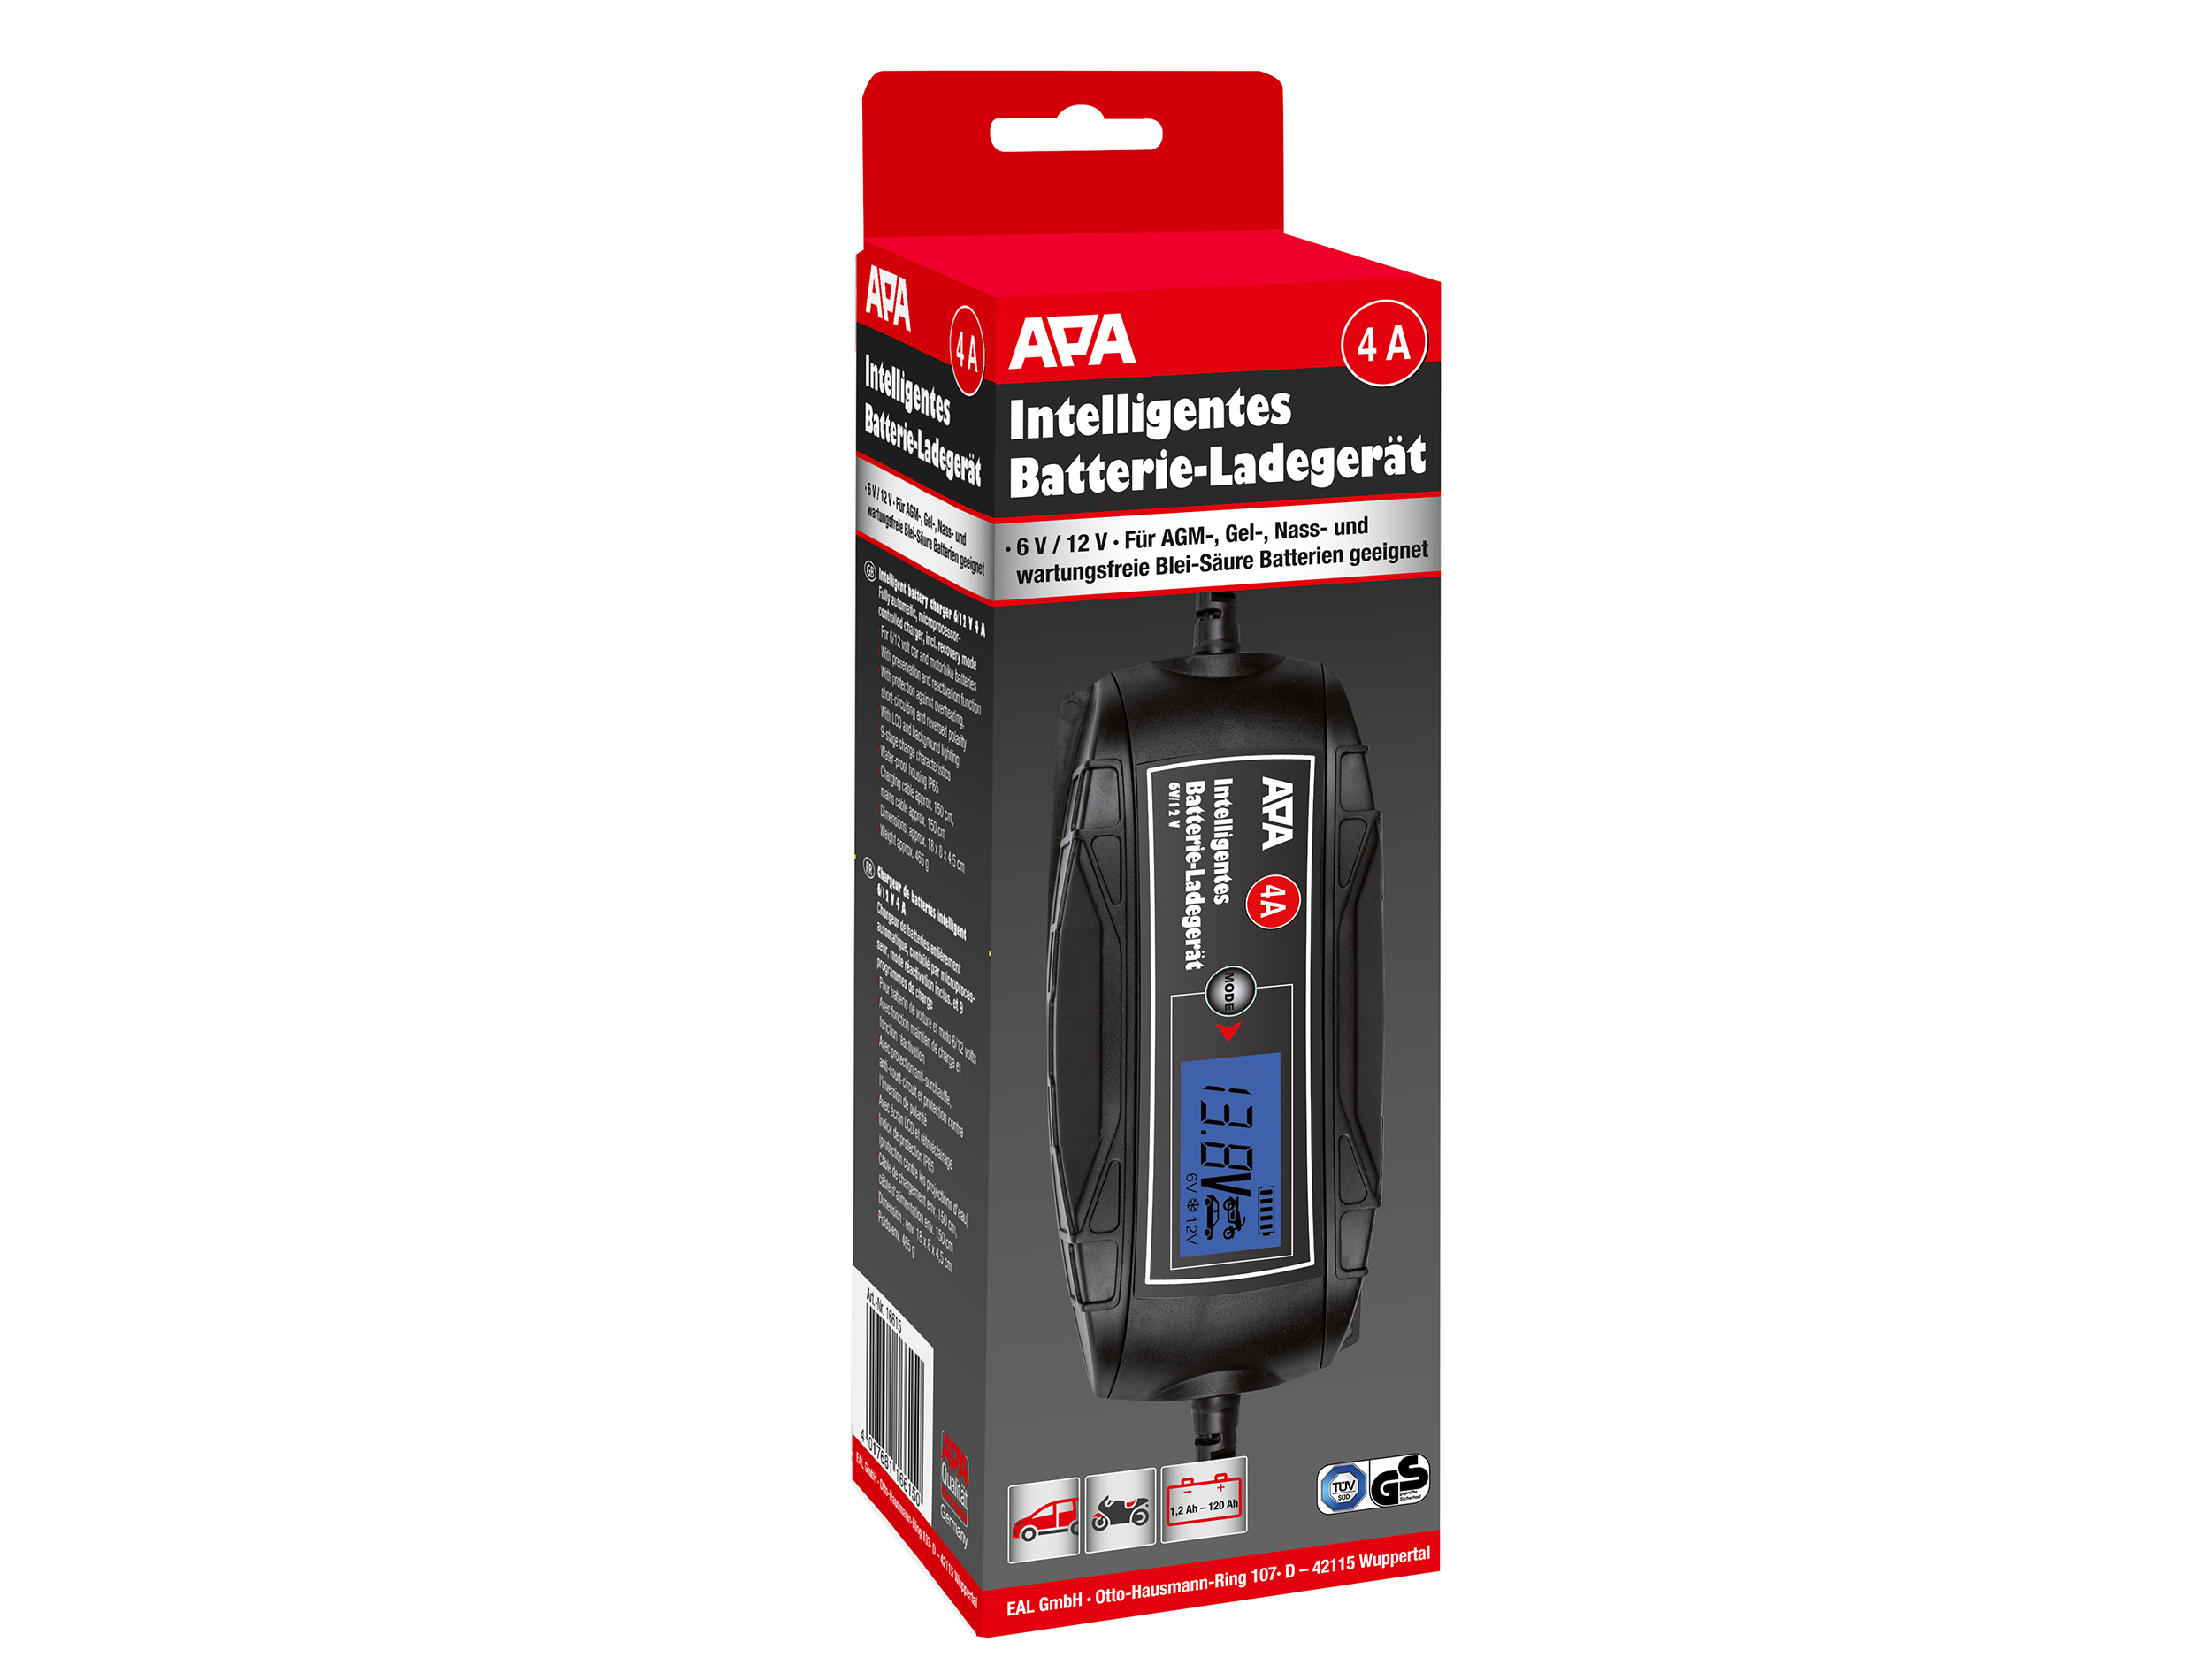 APA Intelligentes Batterieladegerät | Norma24